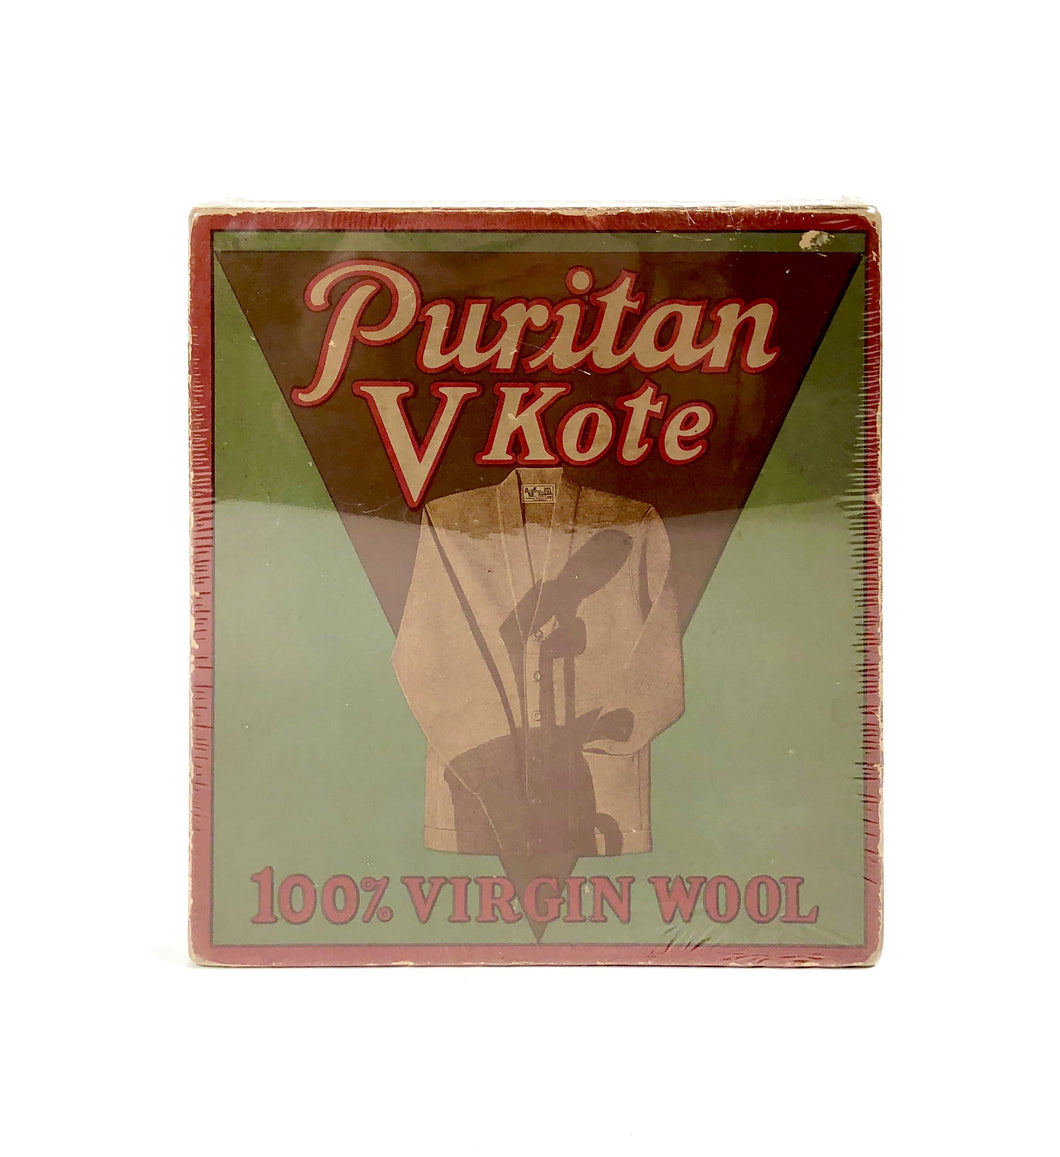 1920's PURITAN V KOTE Wool Cardigan, Knit Sweater Box, Vintage Fashion